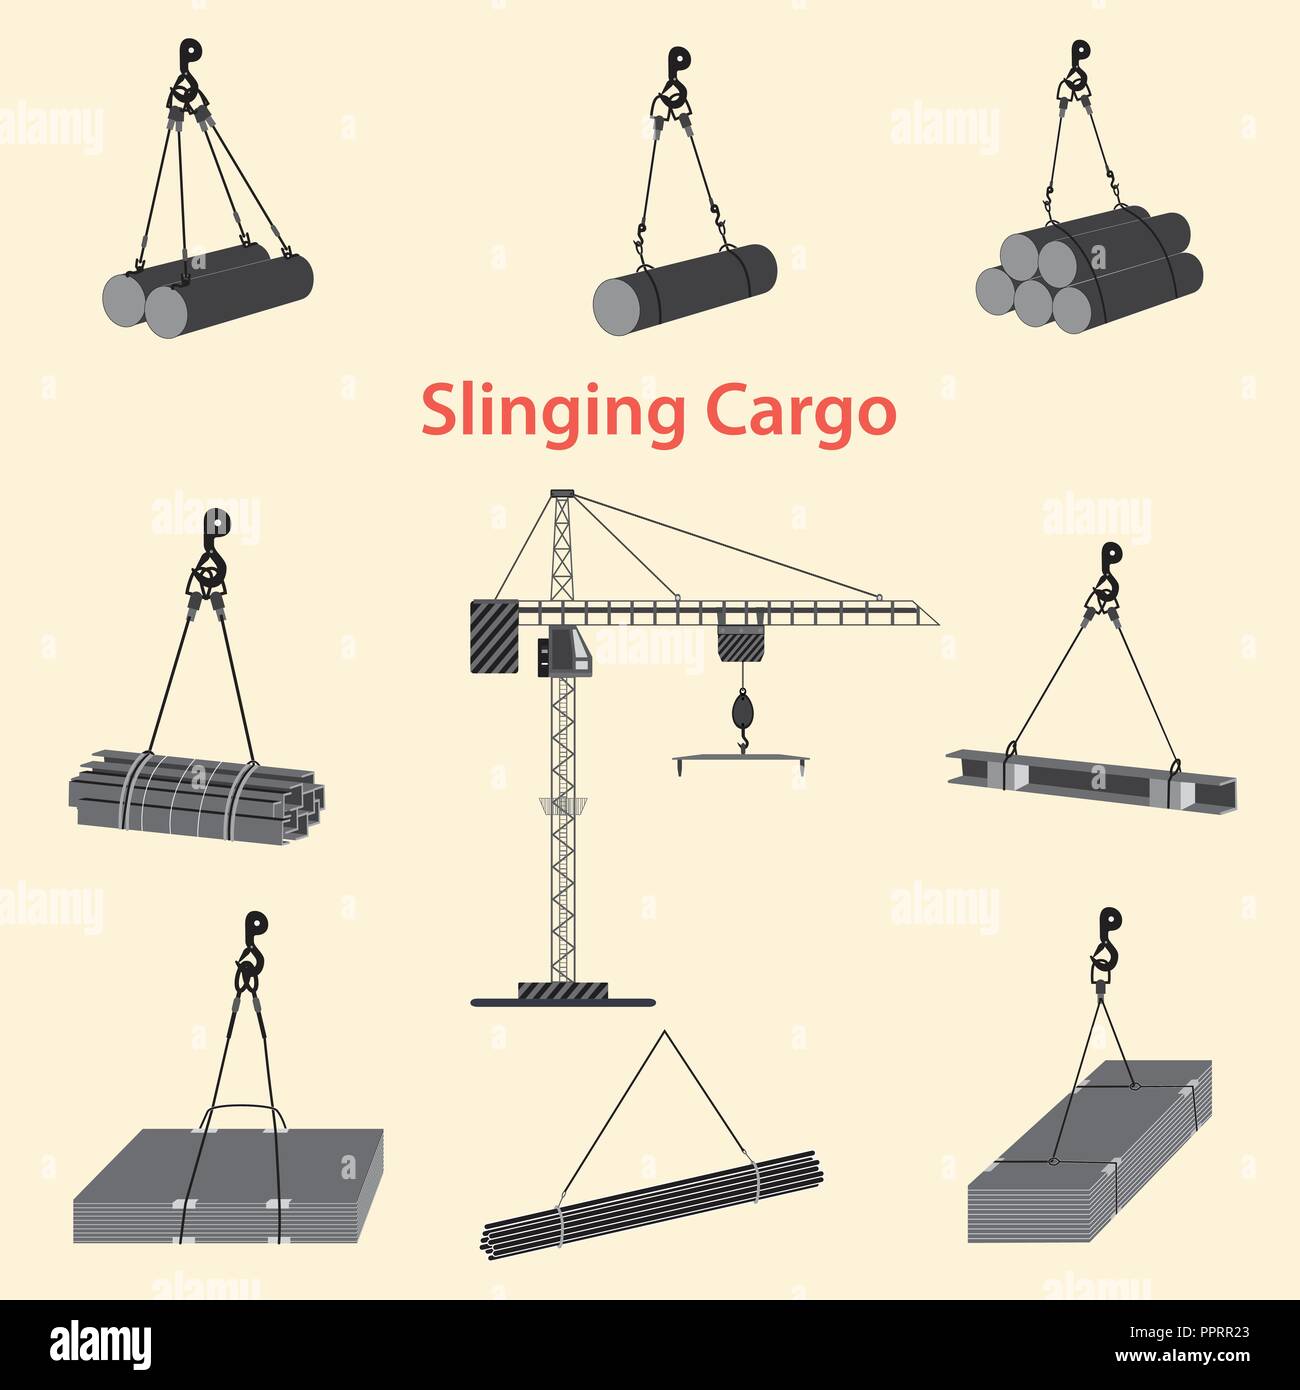 Circuitry Slinging Cargo Stock Vector